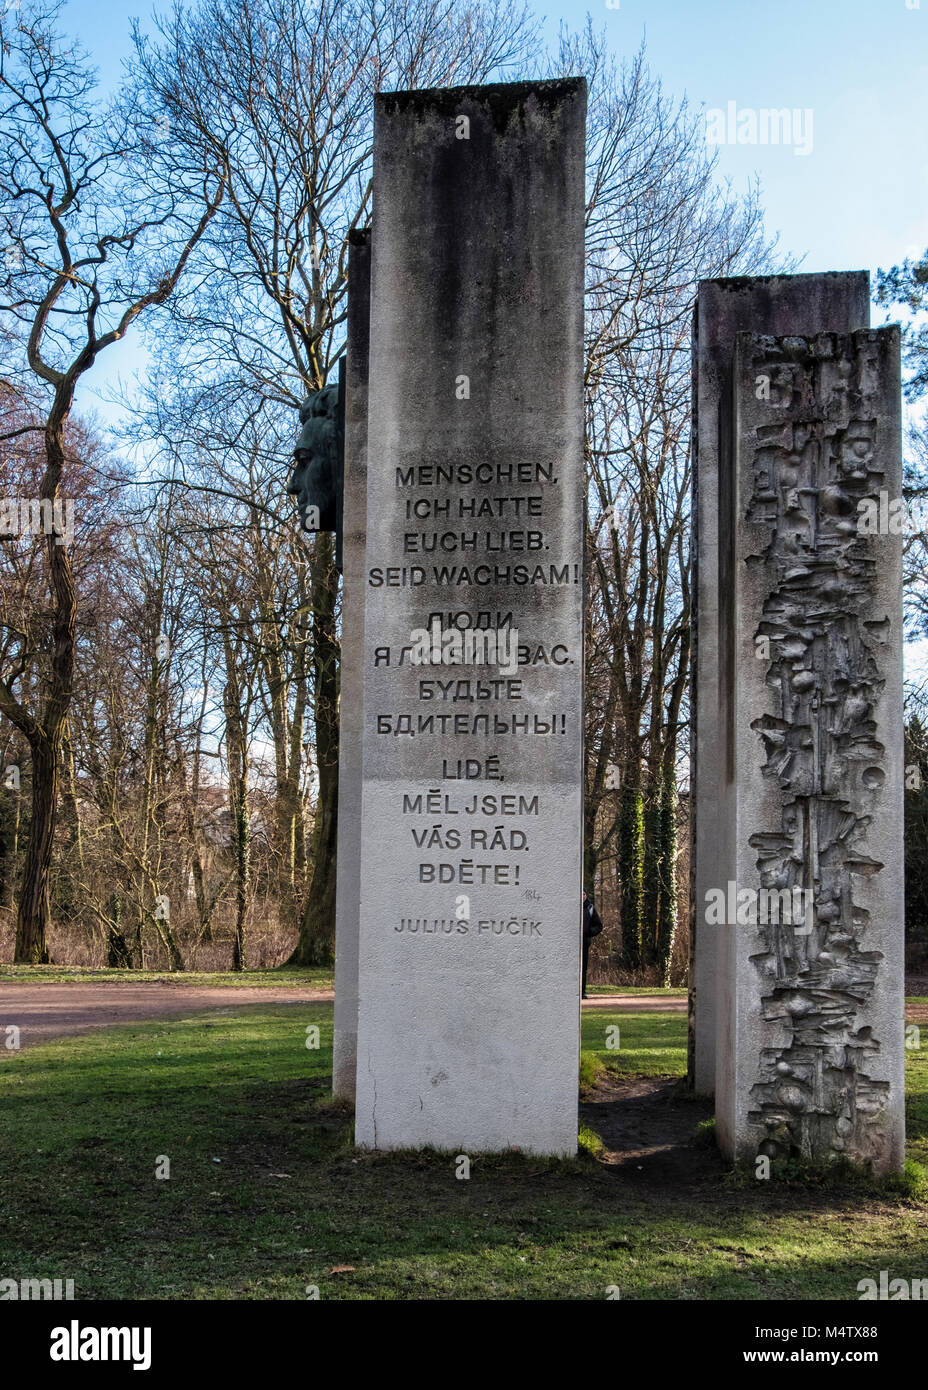 Memorial for Julius Fučík , Czech Communist Journalist arrested by Nazis and murdered in 1943. Monument in the Bürgerpark, Pankow, Berlin  Julius Fučí Stock Photo